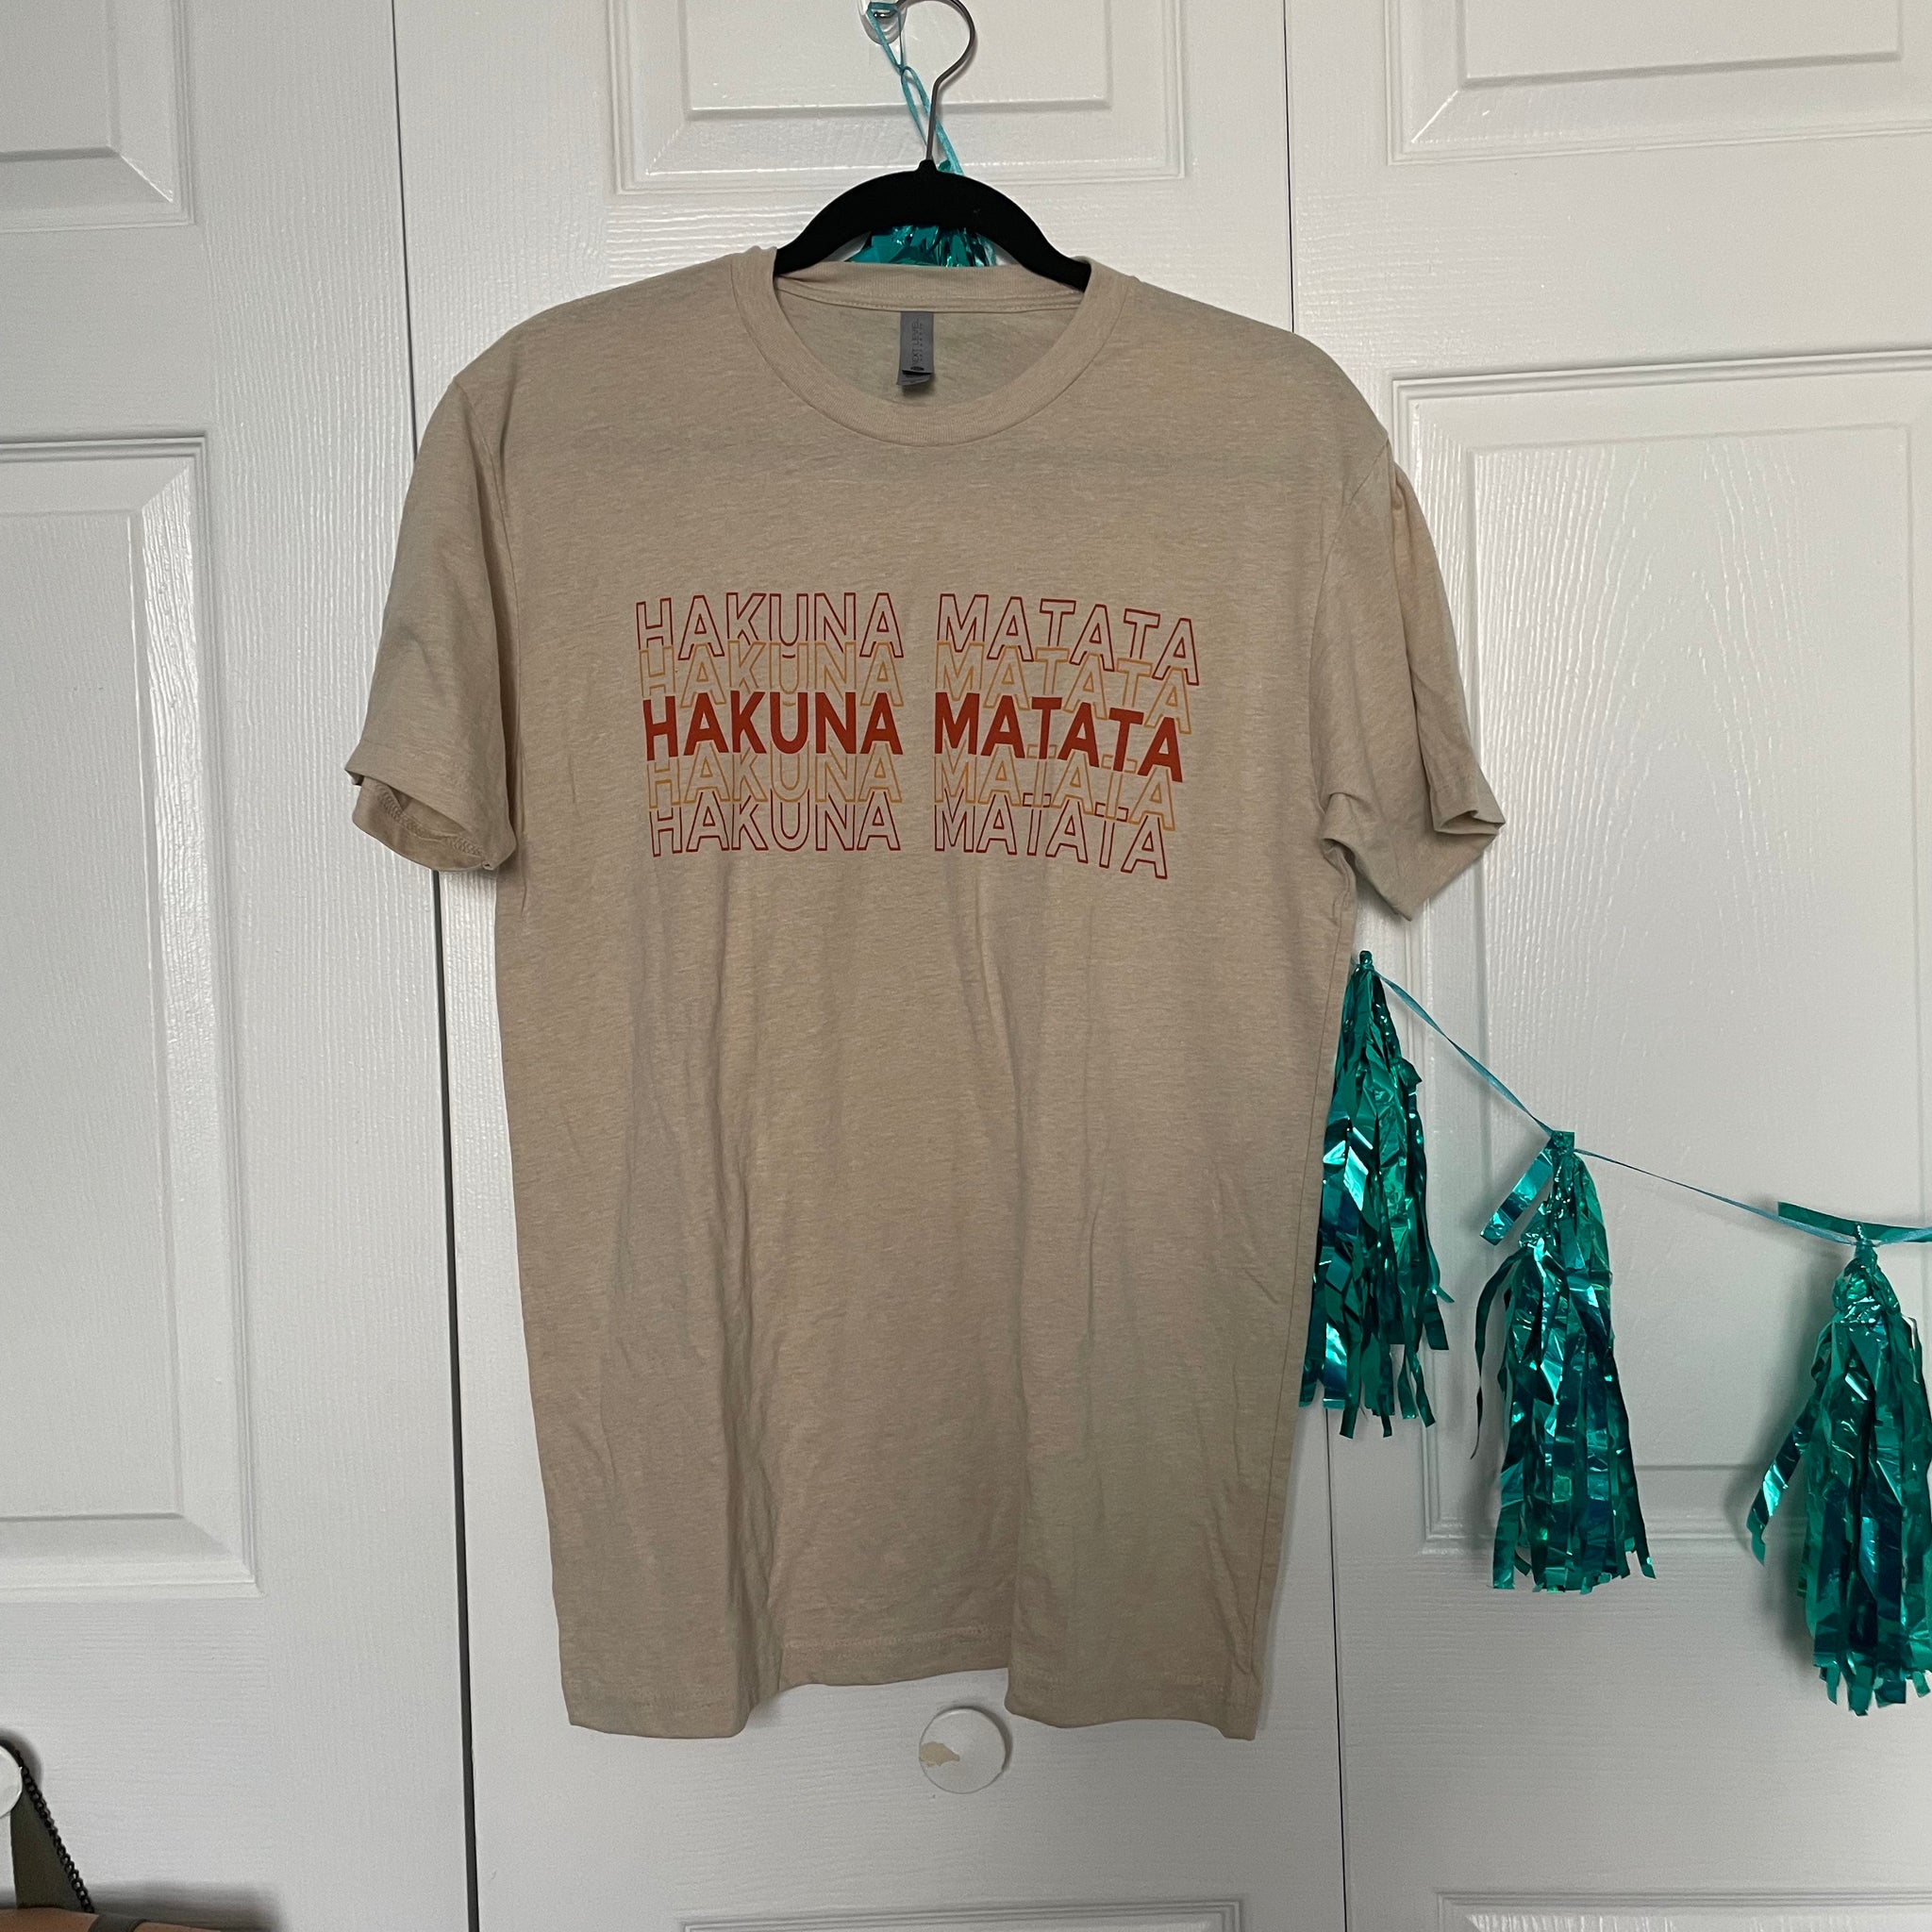 Hakuna Matata Lion King Shirt || Shirt Club Extras